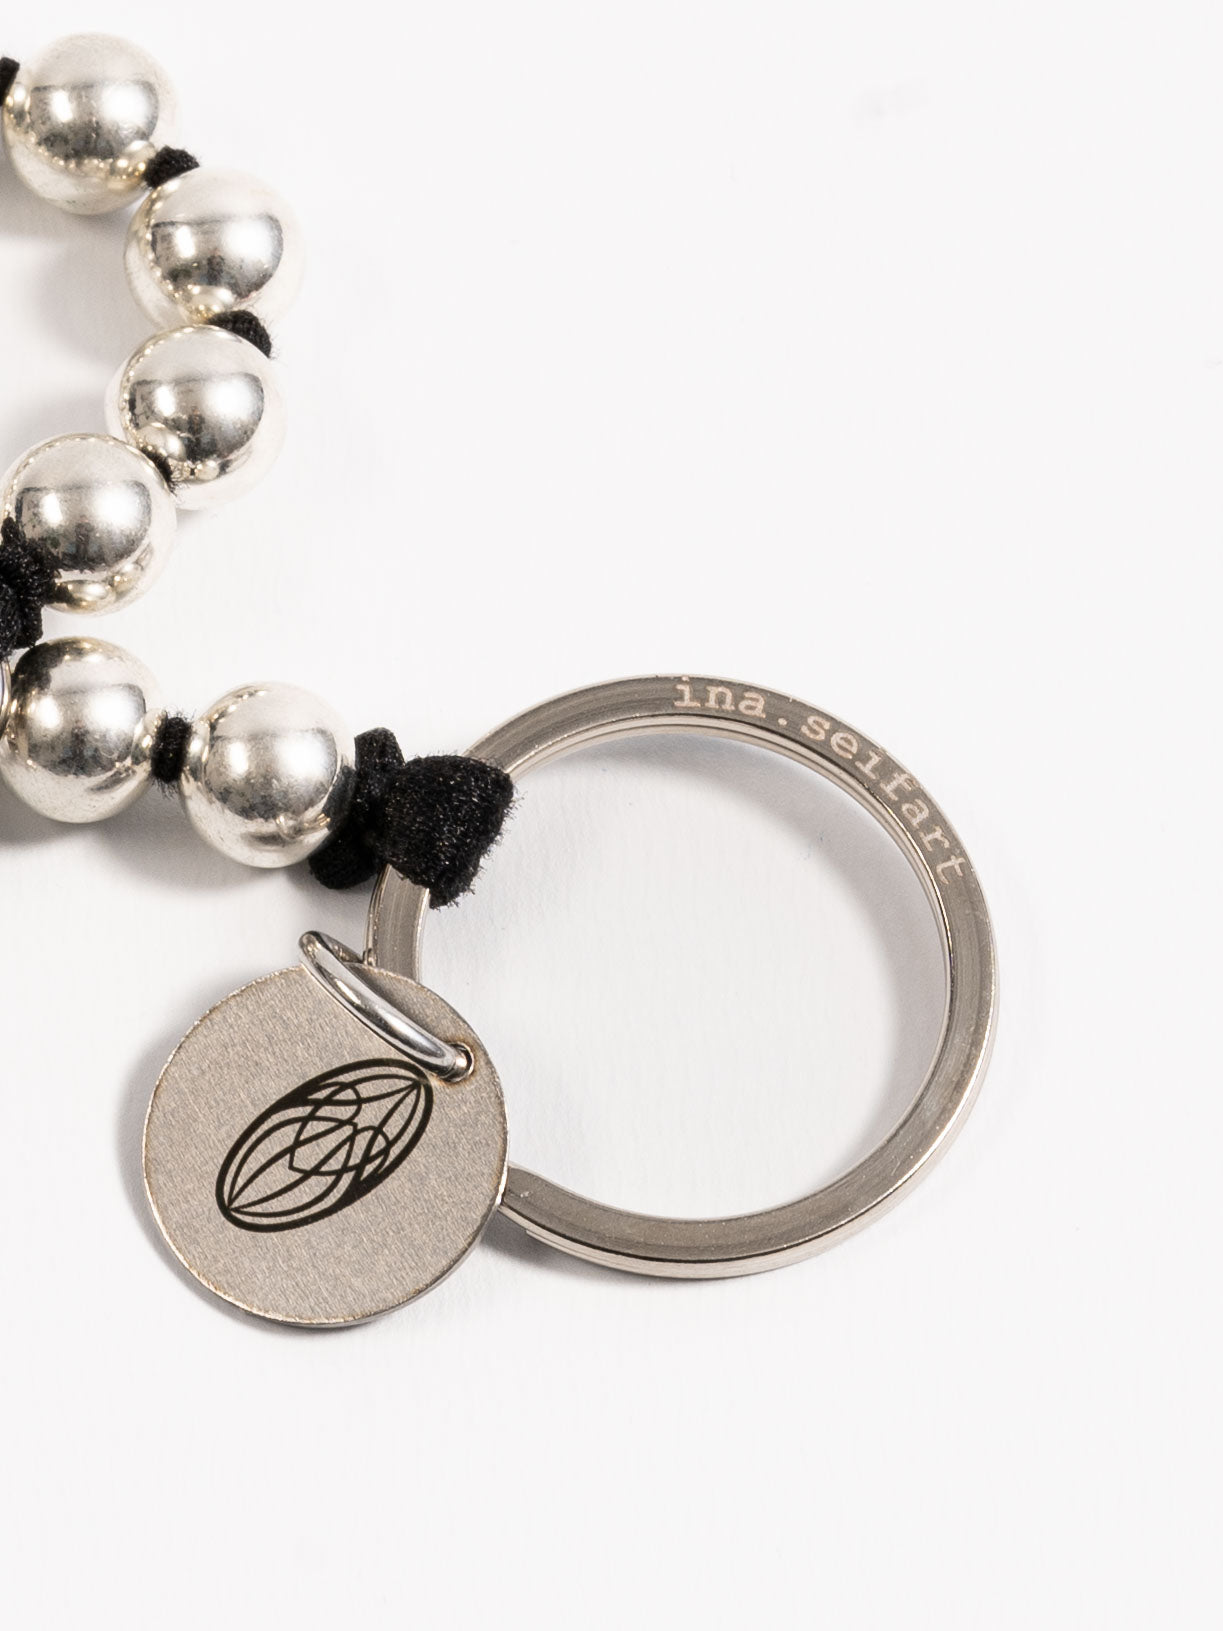 x Ina Seifart Pearls Short Keychain Silver/Black